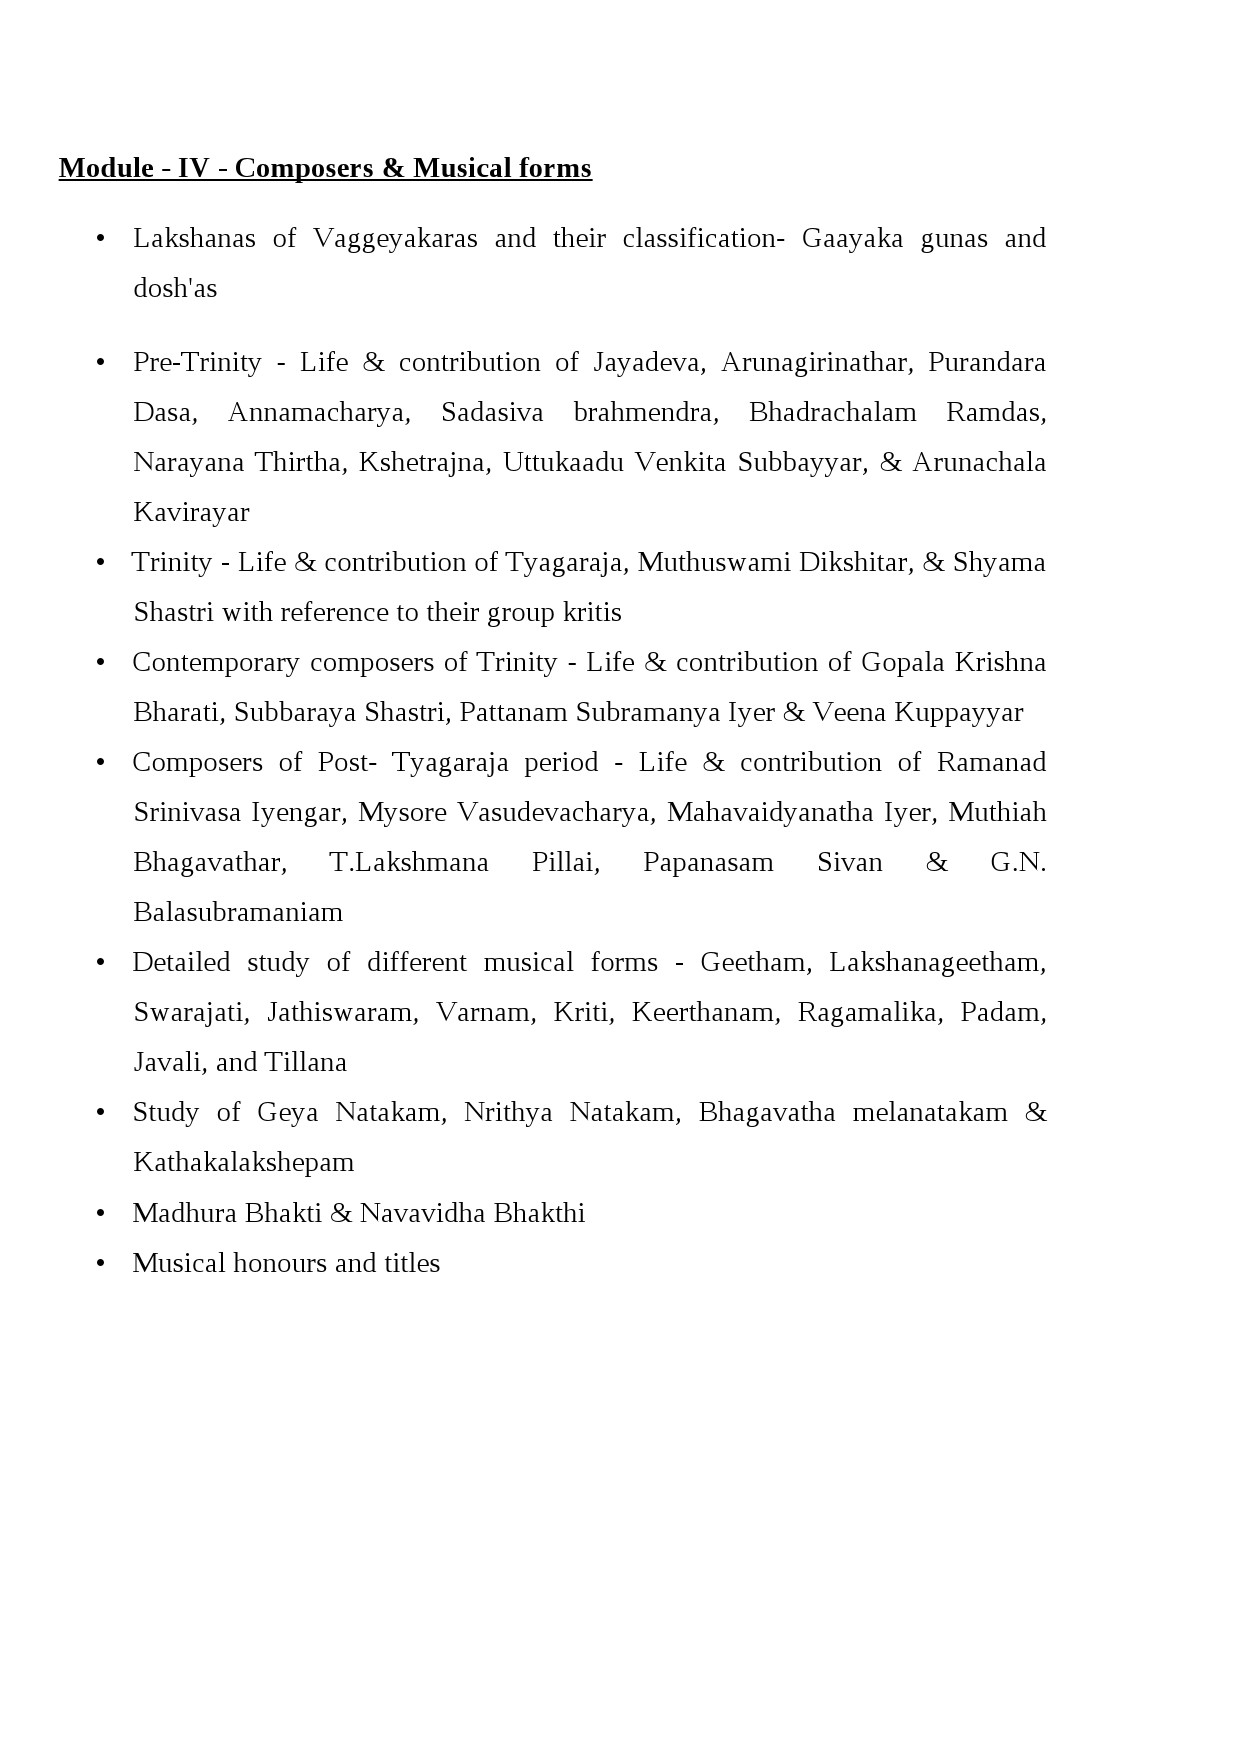 Humanities Syllabus for Kerala PSC 2021 Exam - Notification Image 16